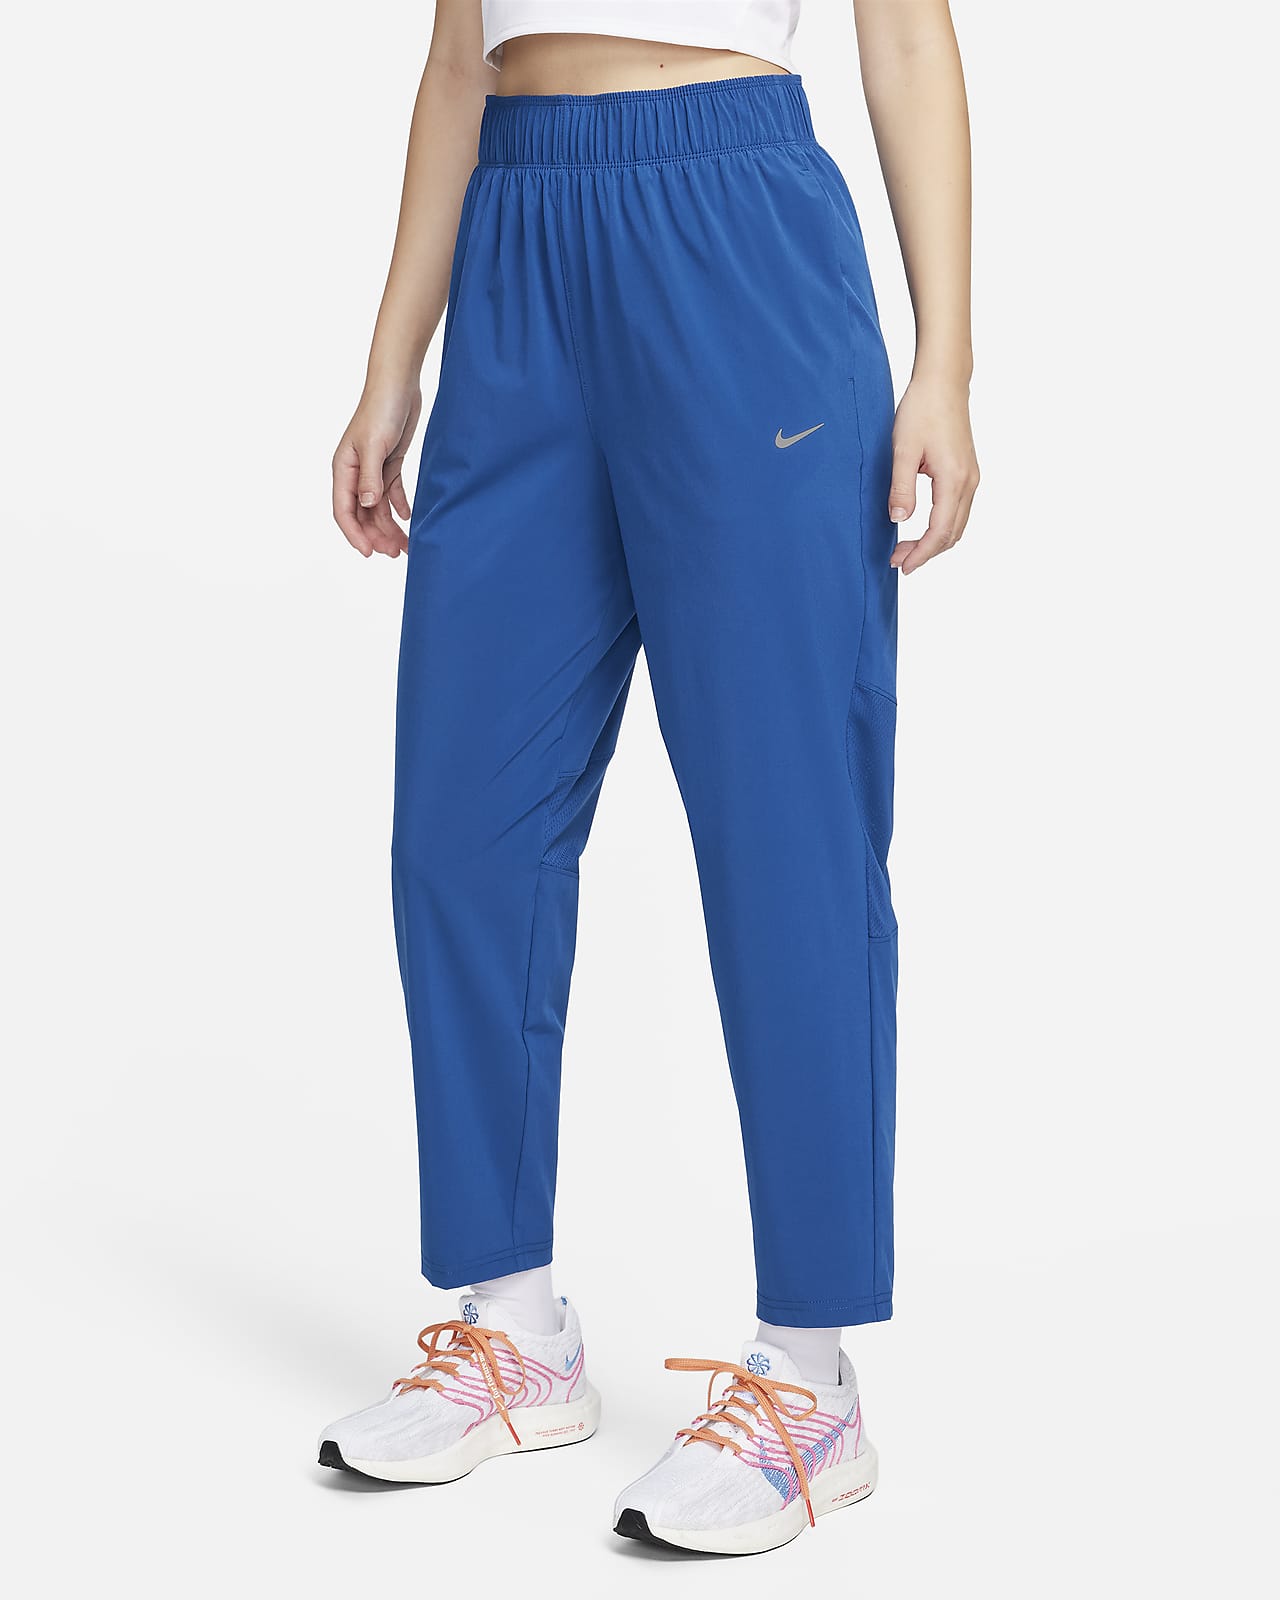 Nike Women's Essential 7/8 Running Pants